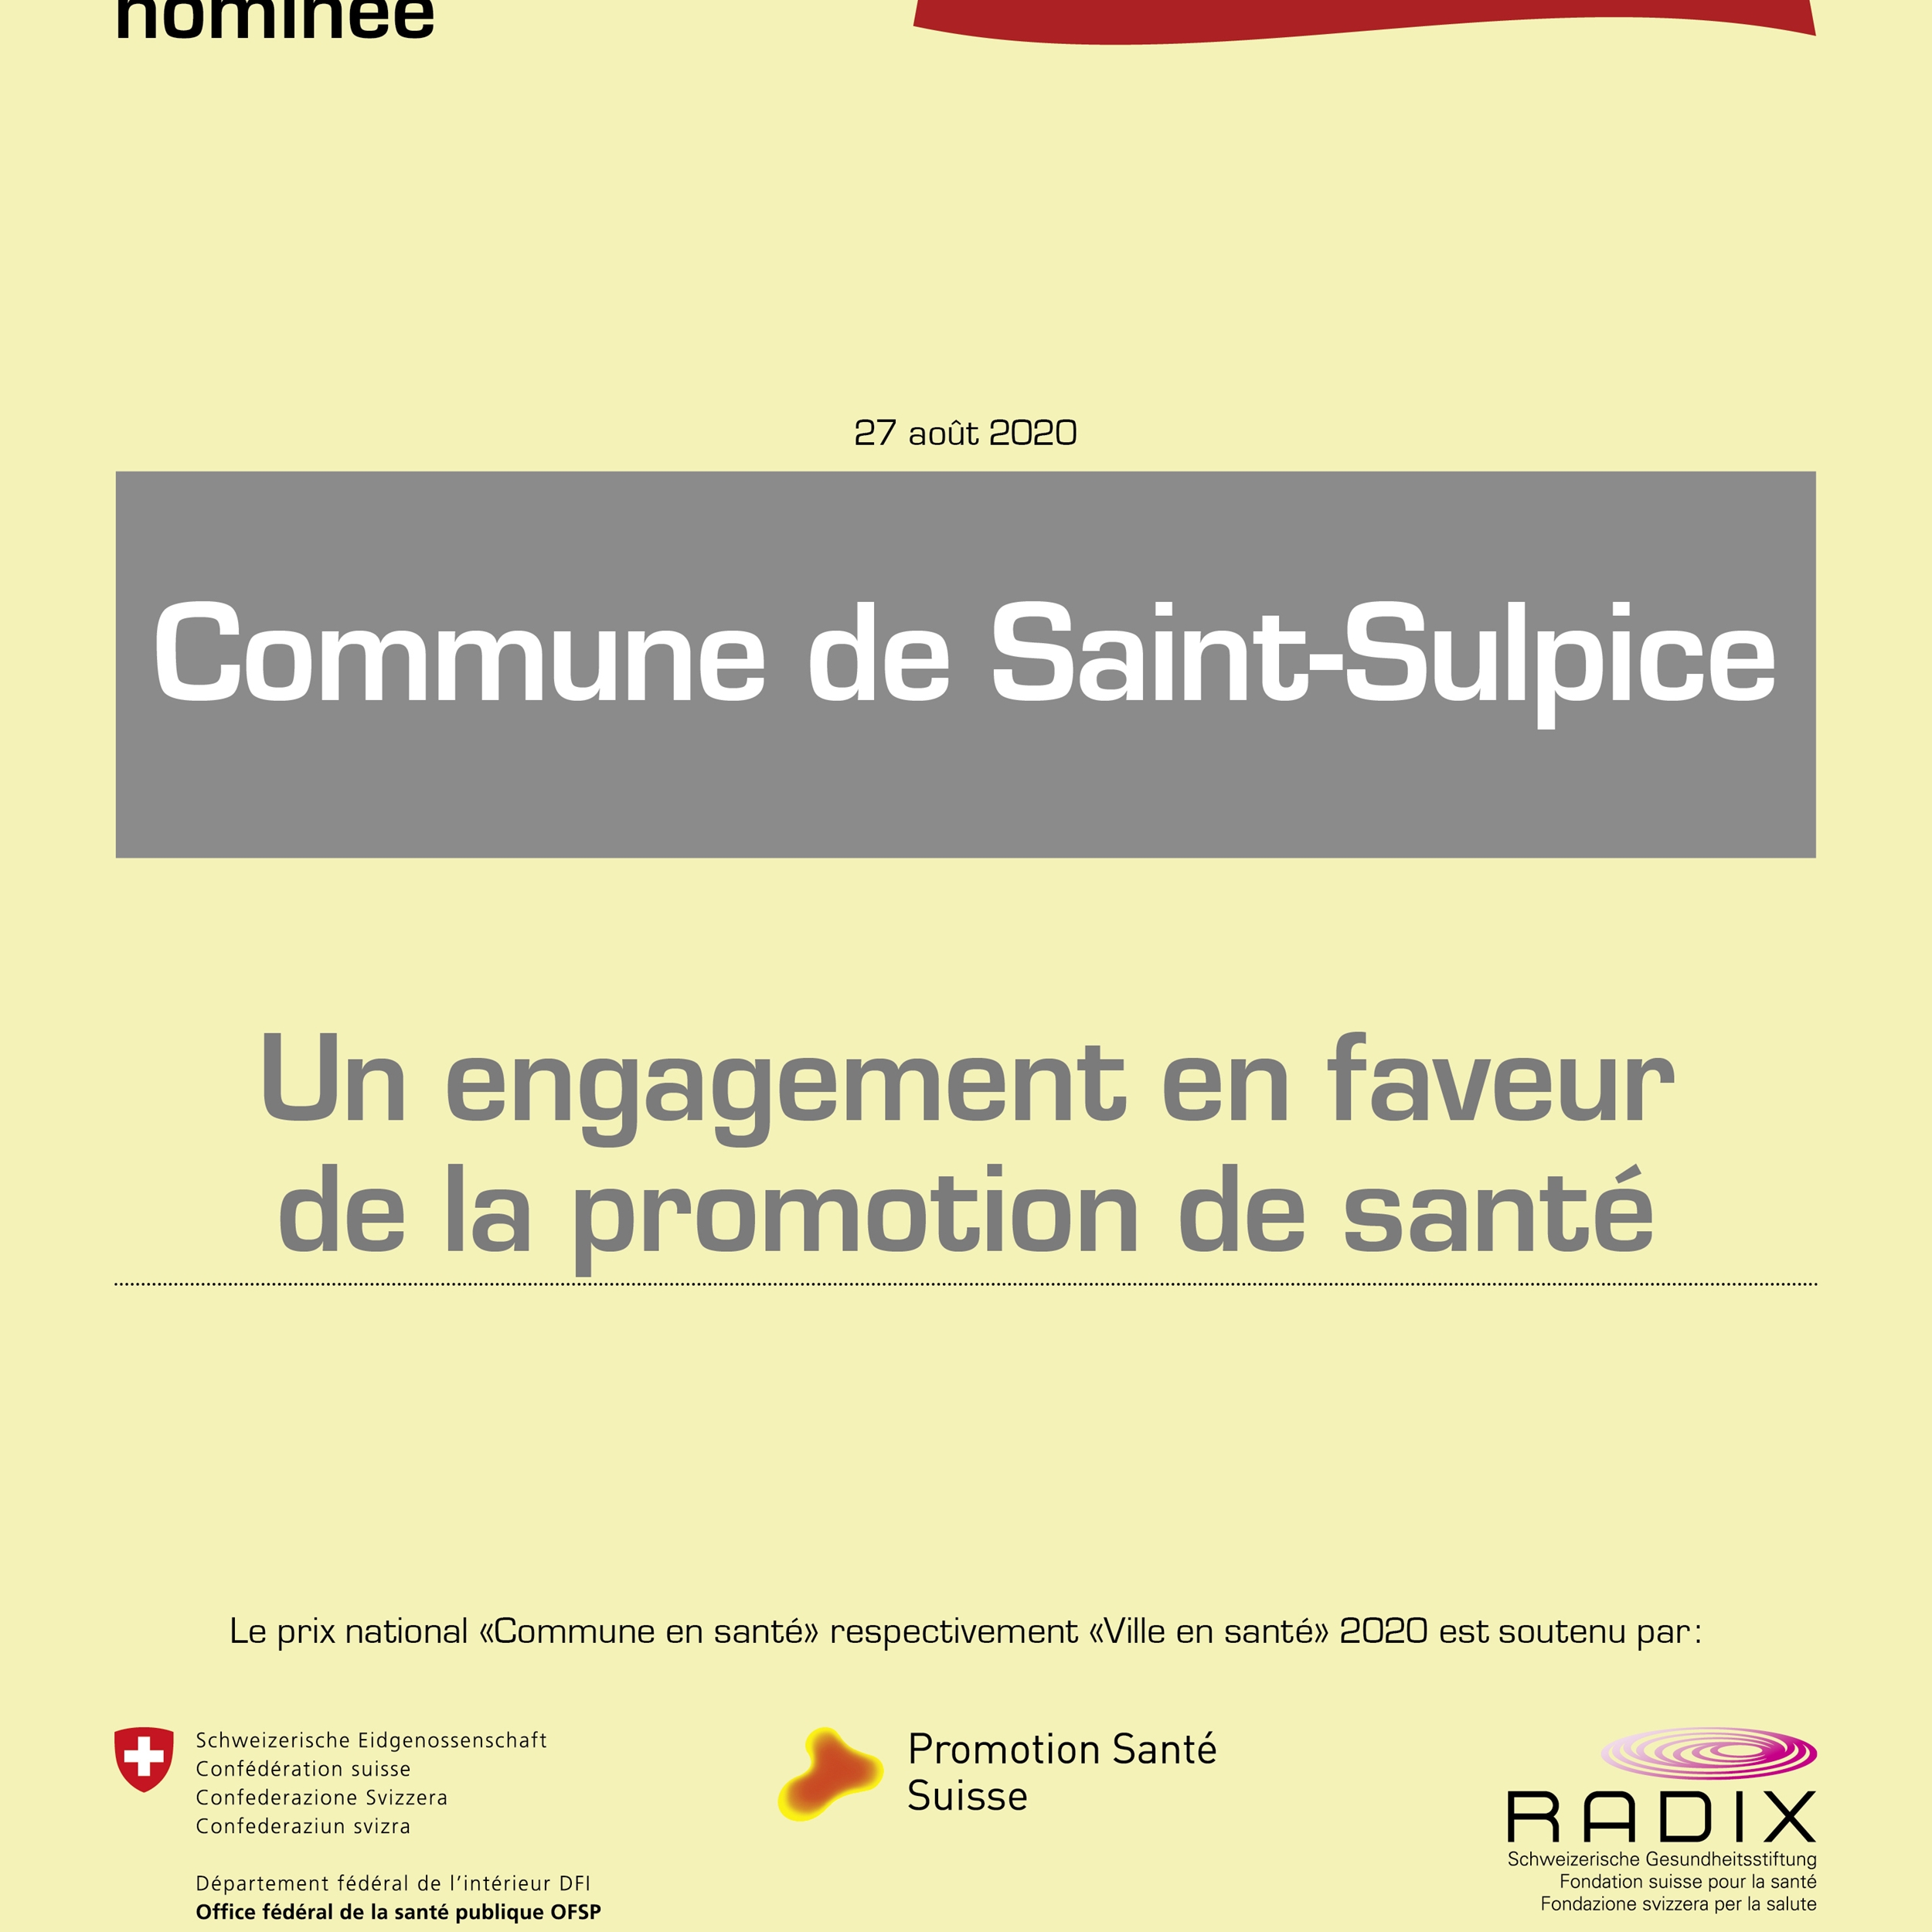 Gg Nomination 2020 Saint Sulpice